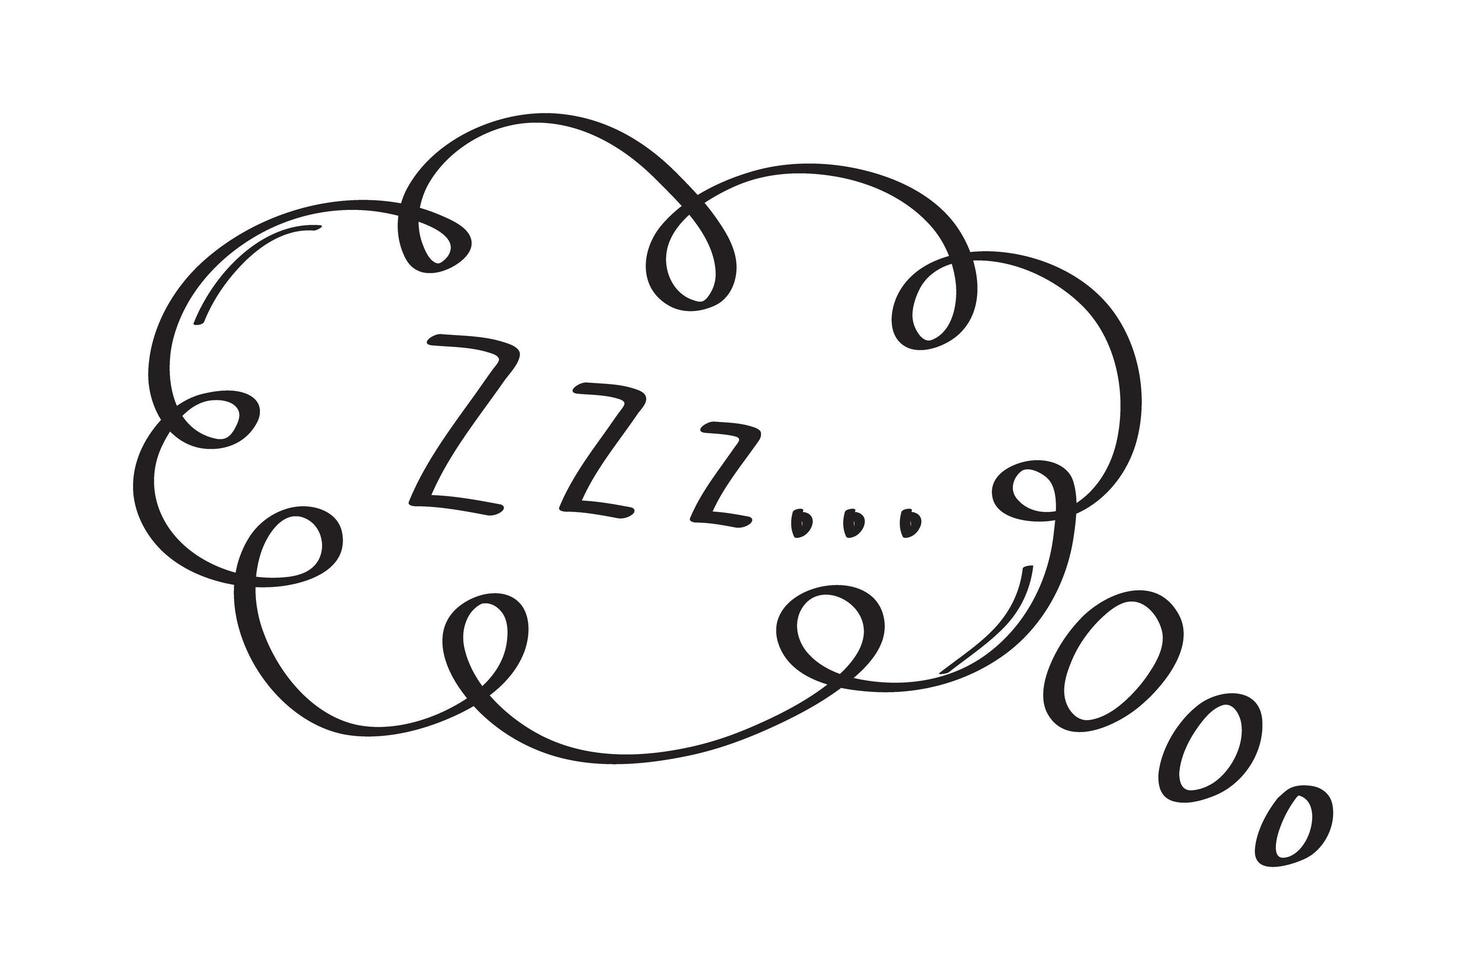 sömn zzzz vektor set i handritad doodle set. sömnlöshet ikon i skiss stil. doodle sömnig symbol